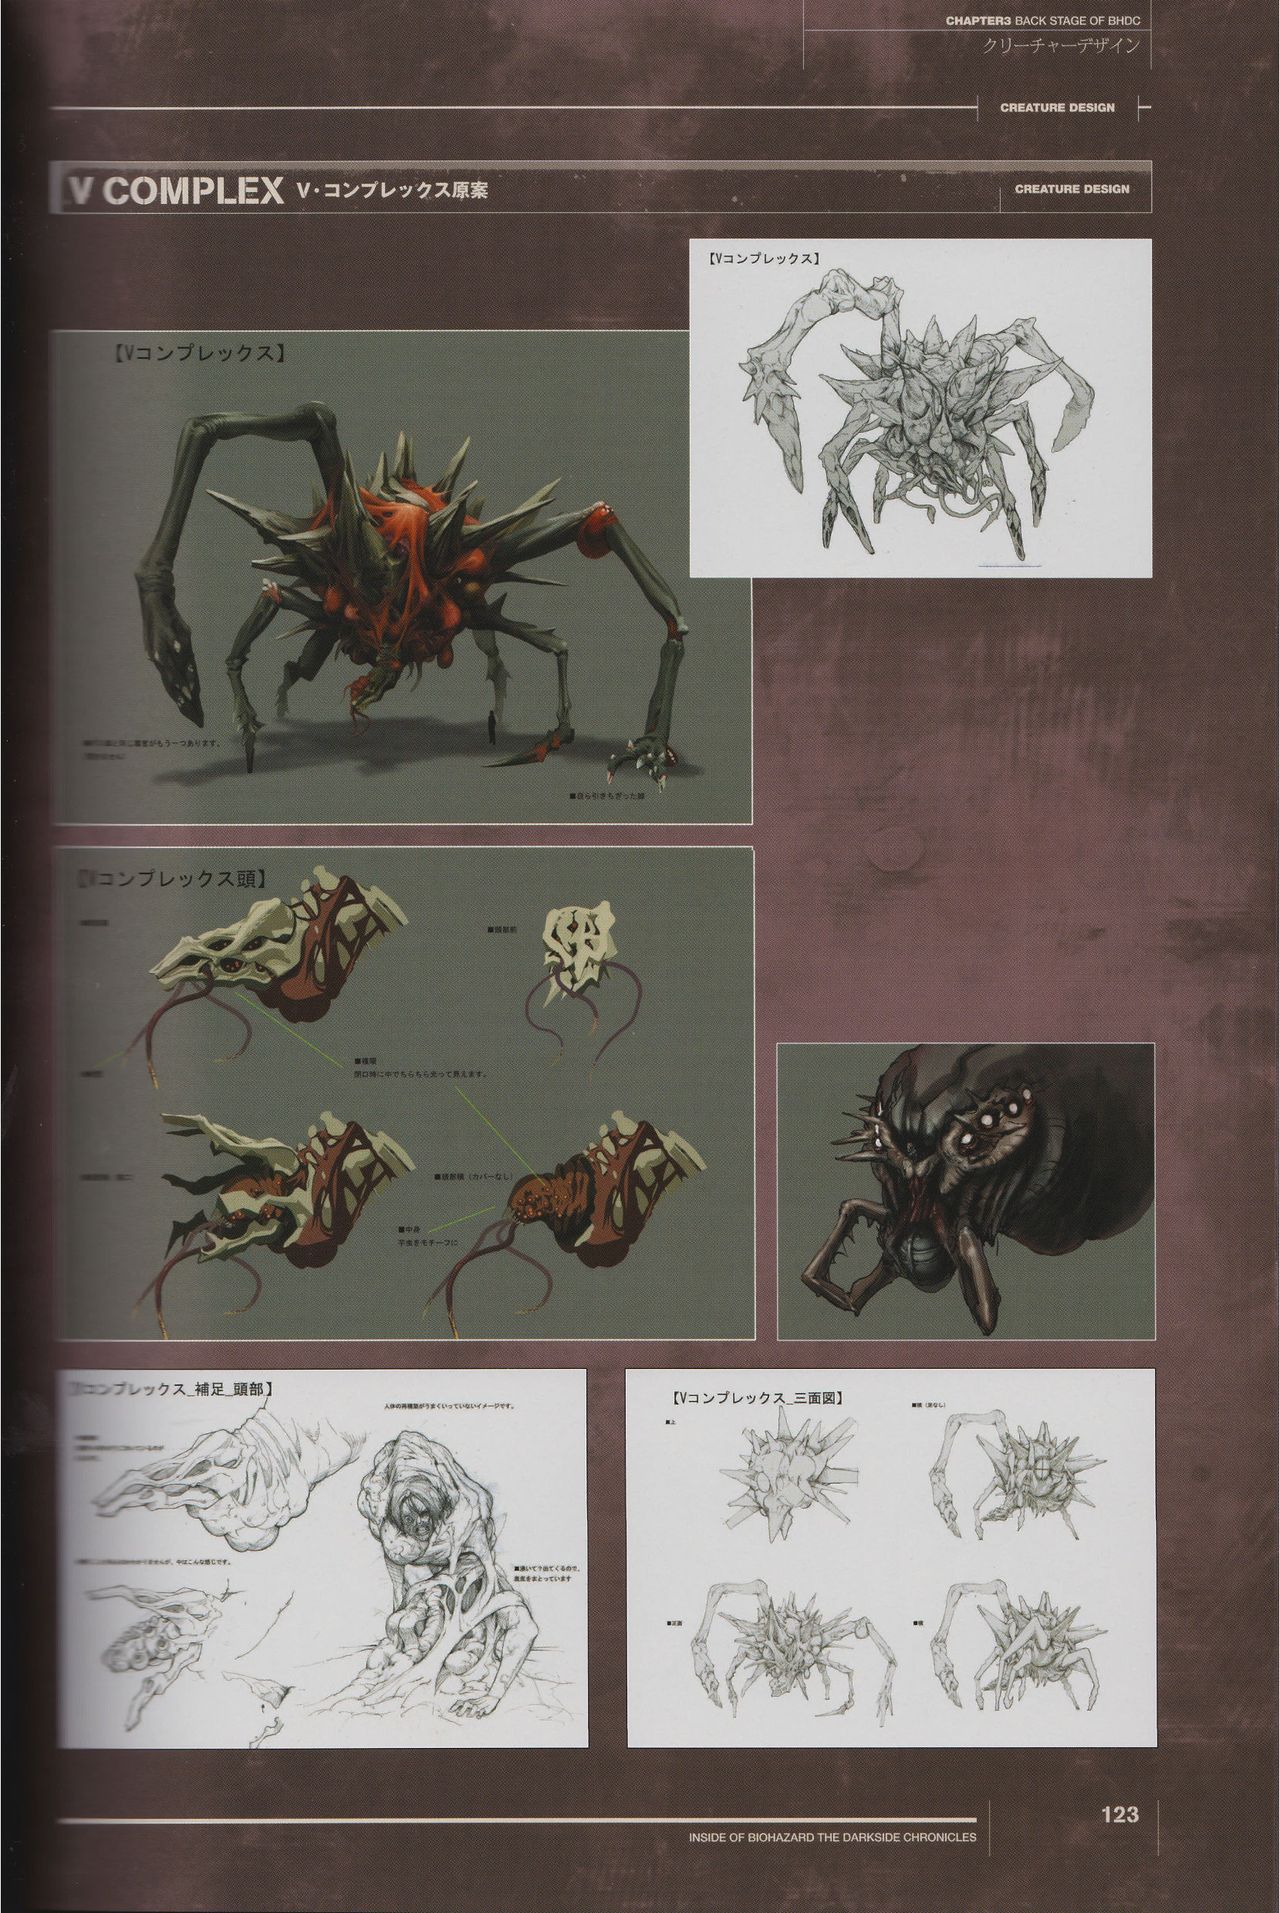 Resident Evil: The Darkside Chronicles Artbook 123